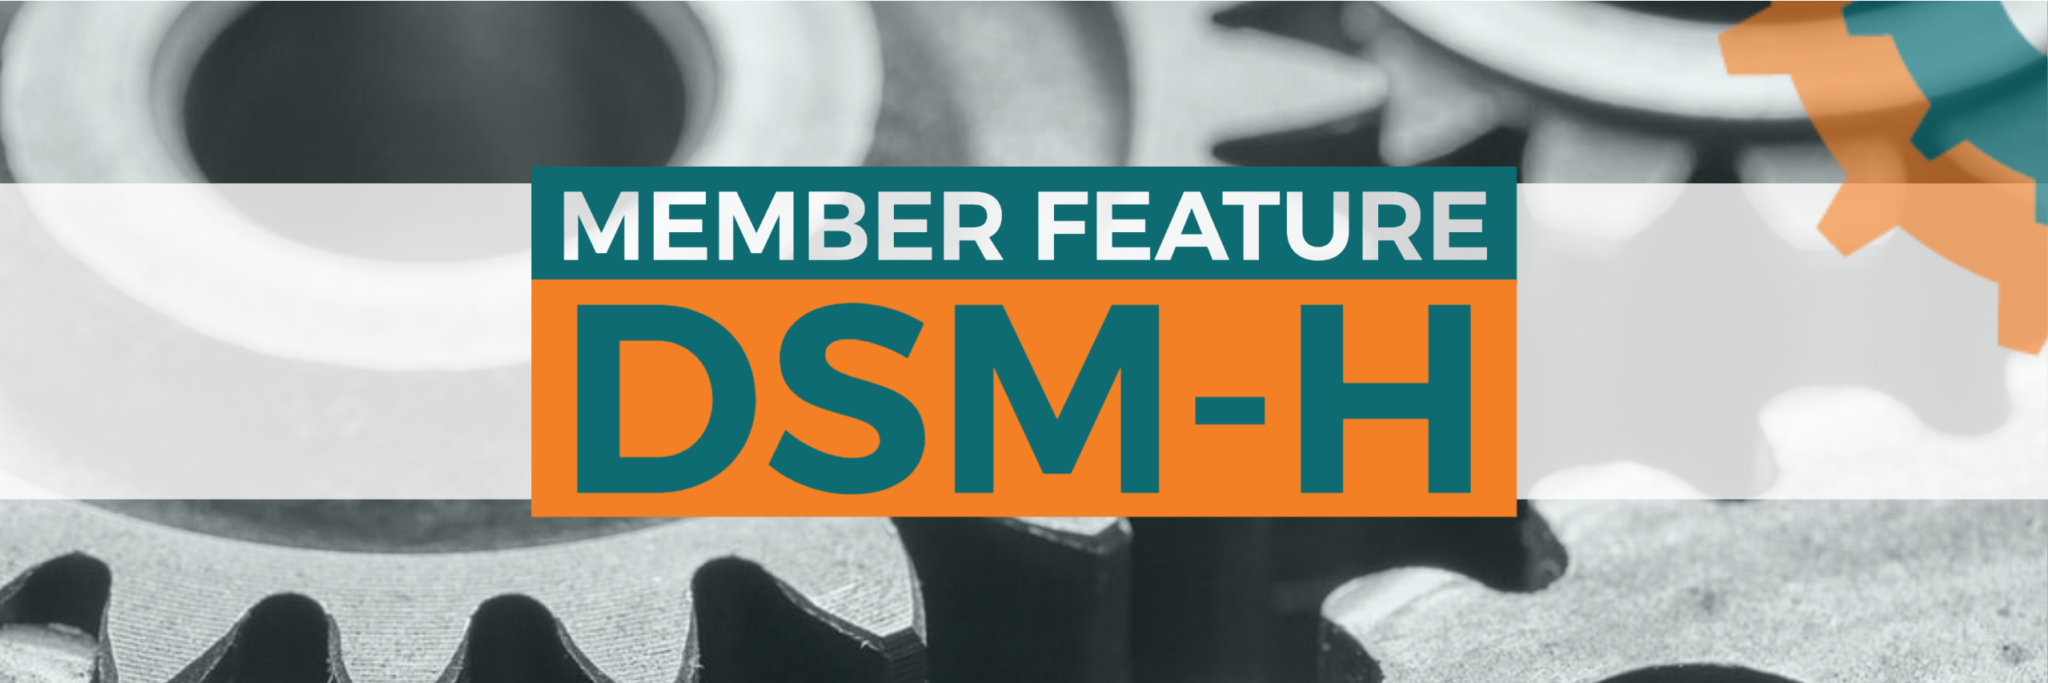 DSM-H Member Feature